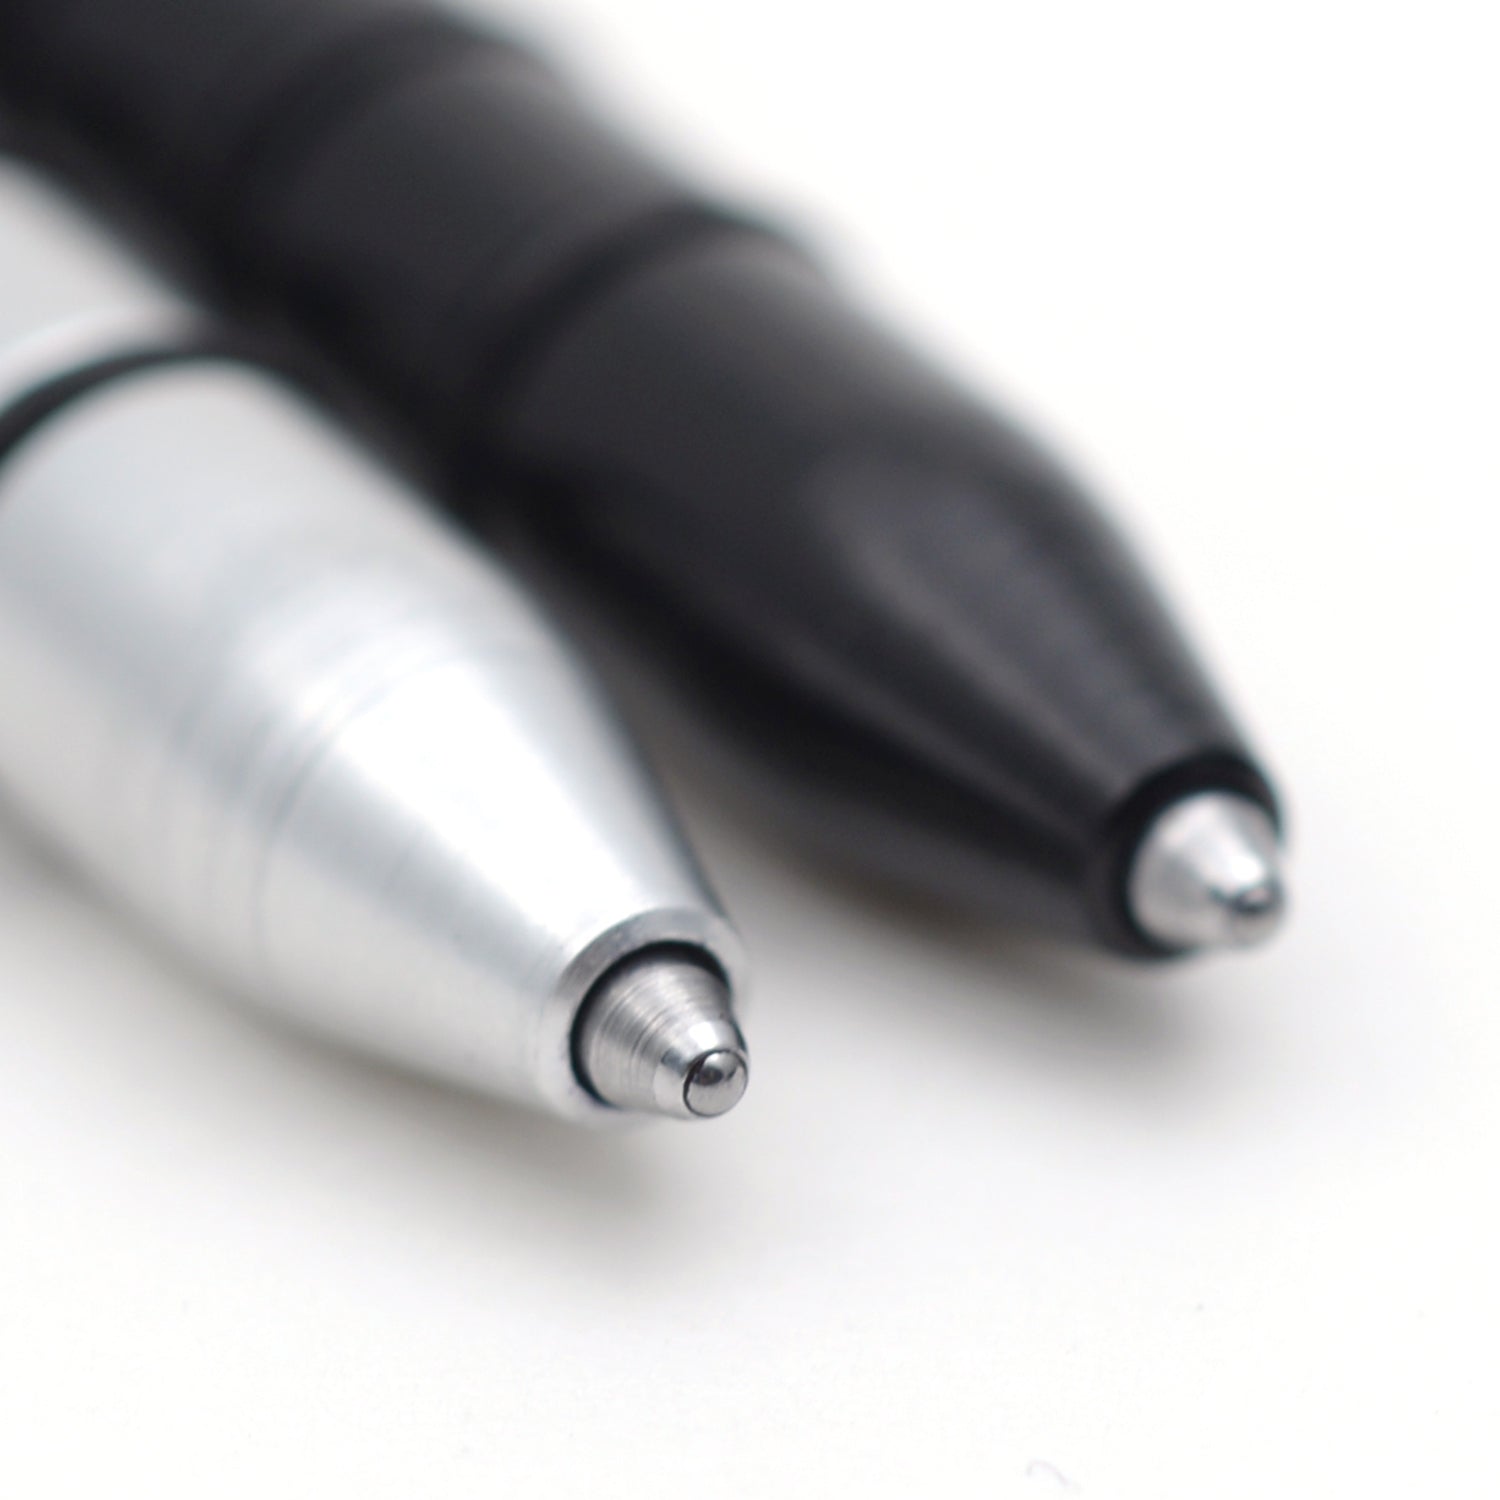 Sharpie - Porous Point Pen: Extra Fine Tip, Black Ink - 57322539 - MSC  Industrial Supply